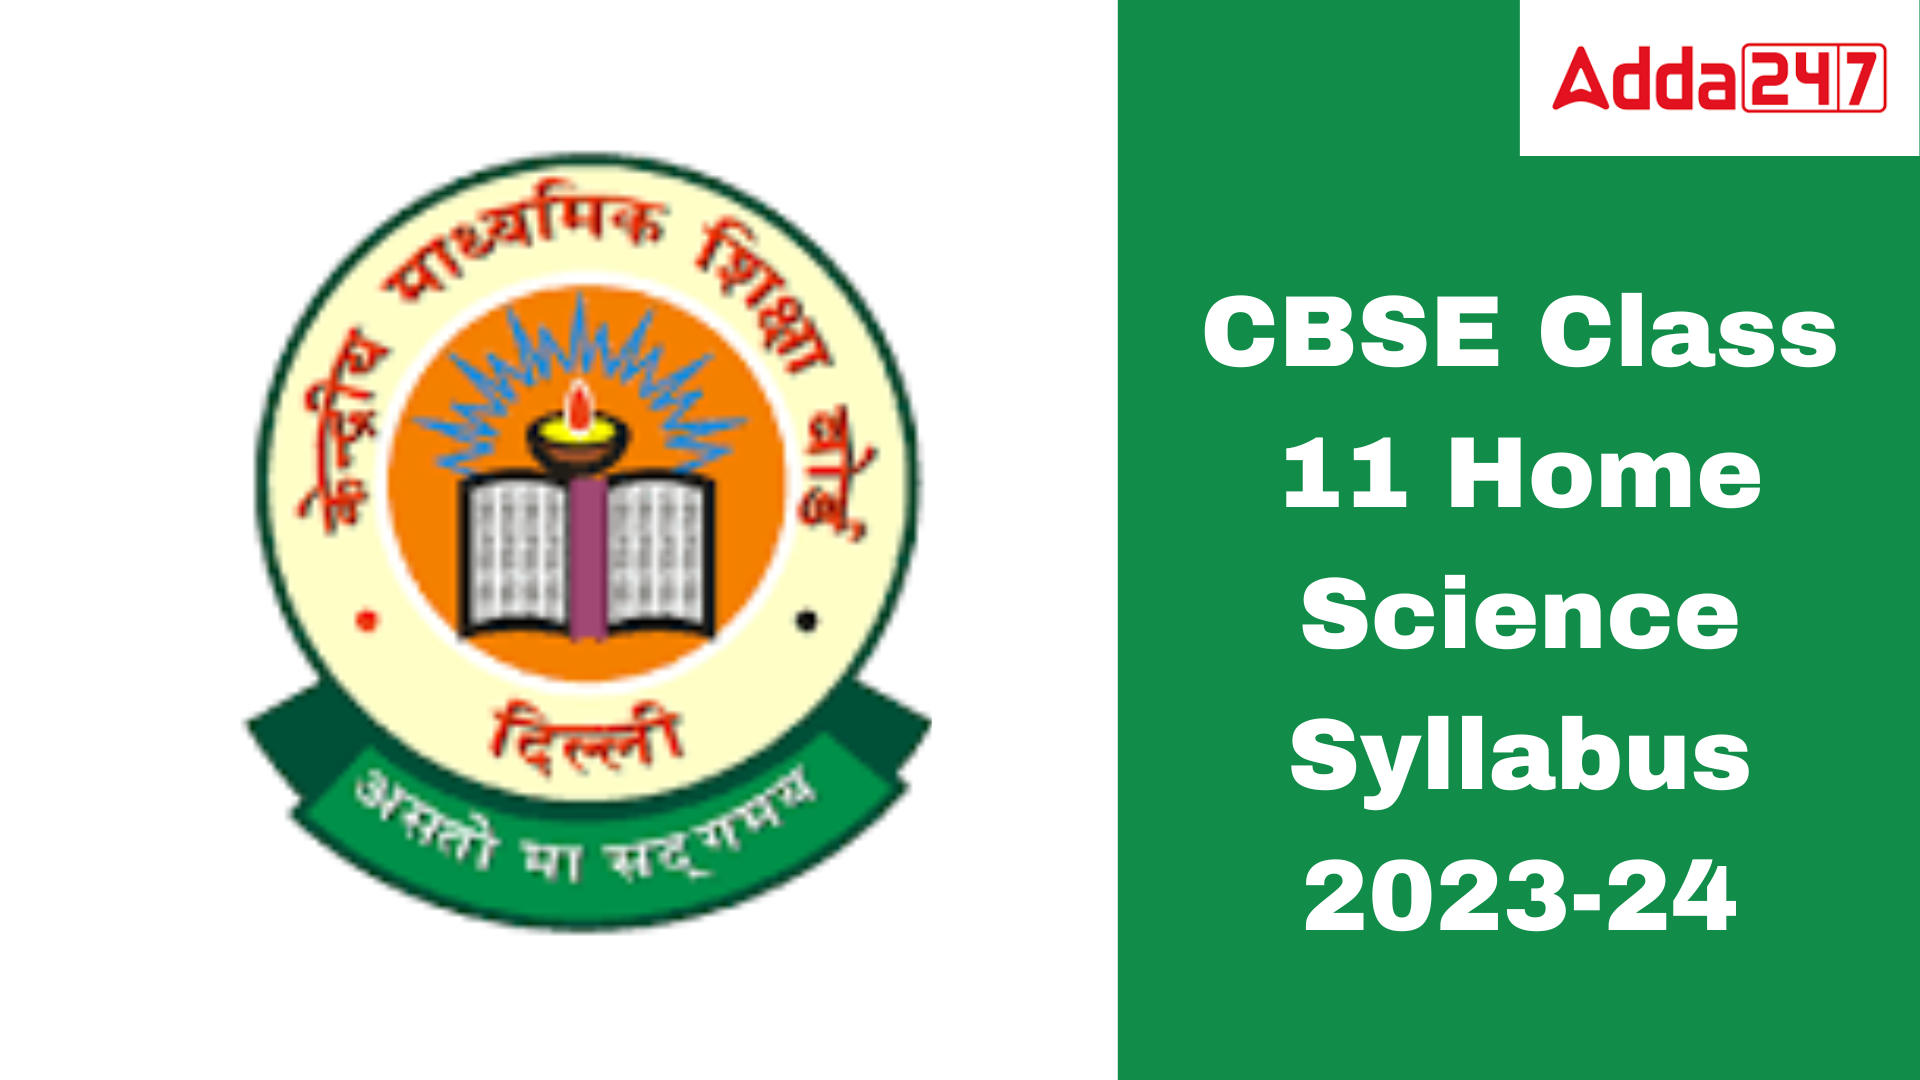 CBSE Class 11 Home Science Syllabus 2023-24